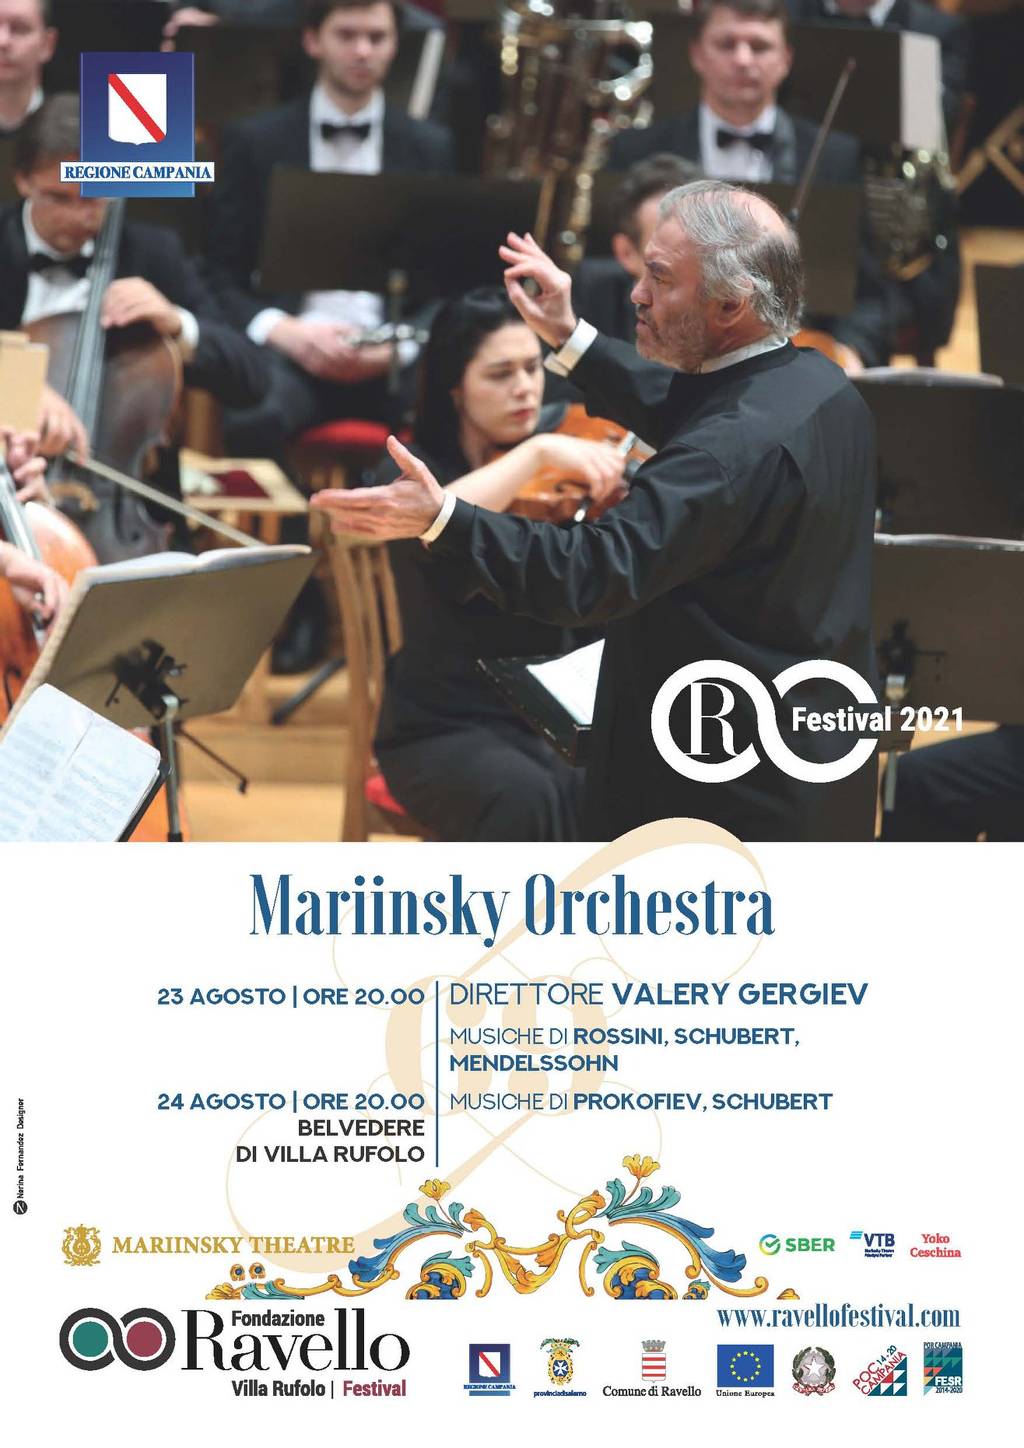 Mariinsky Orchestra